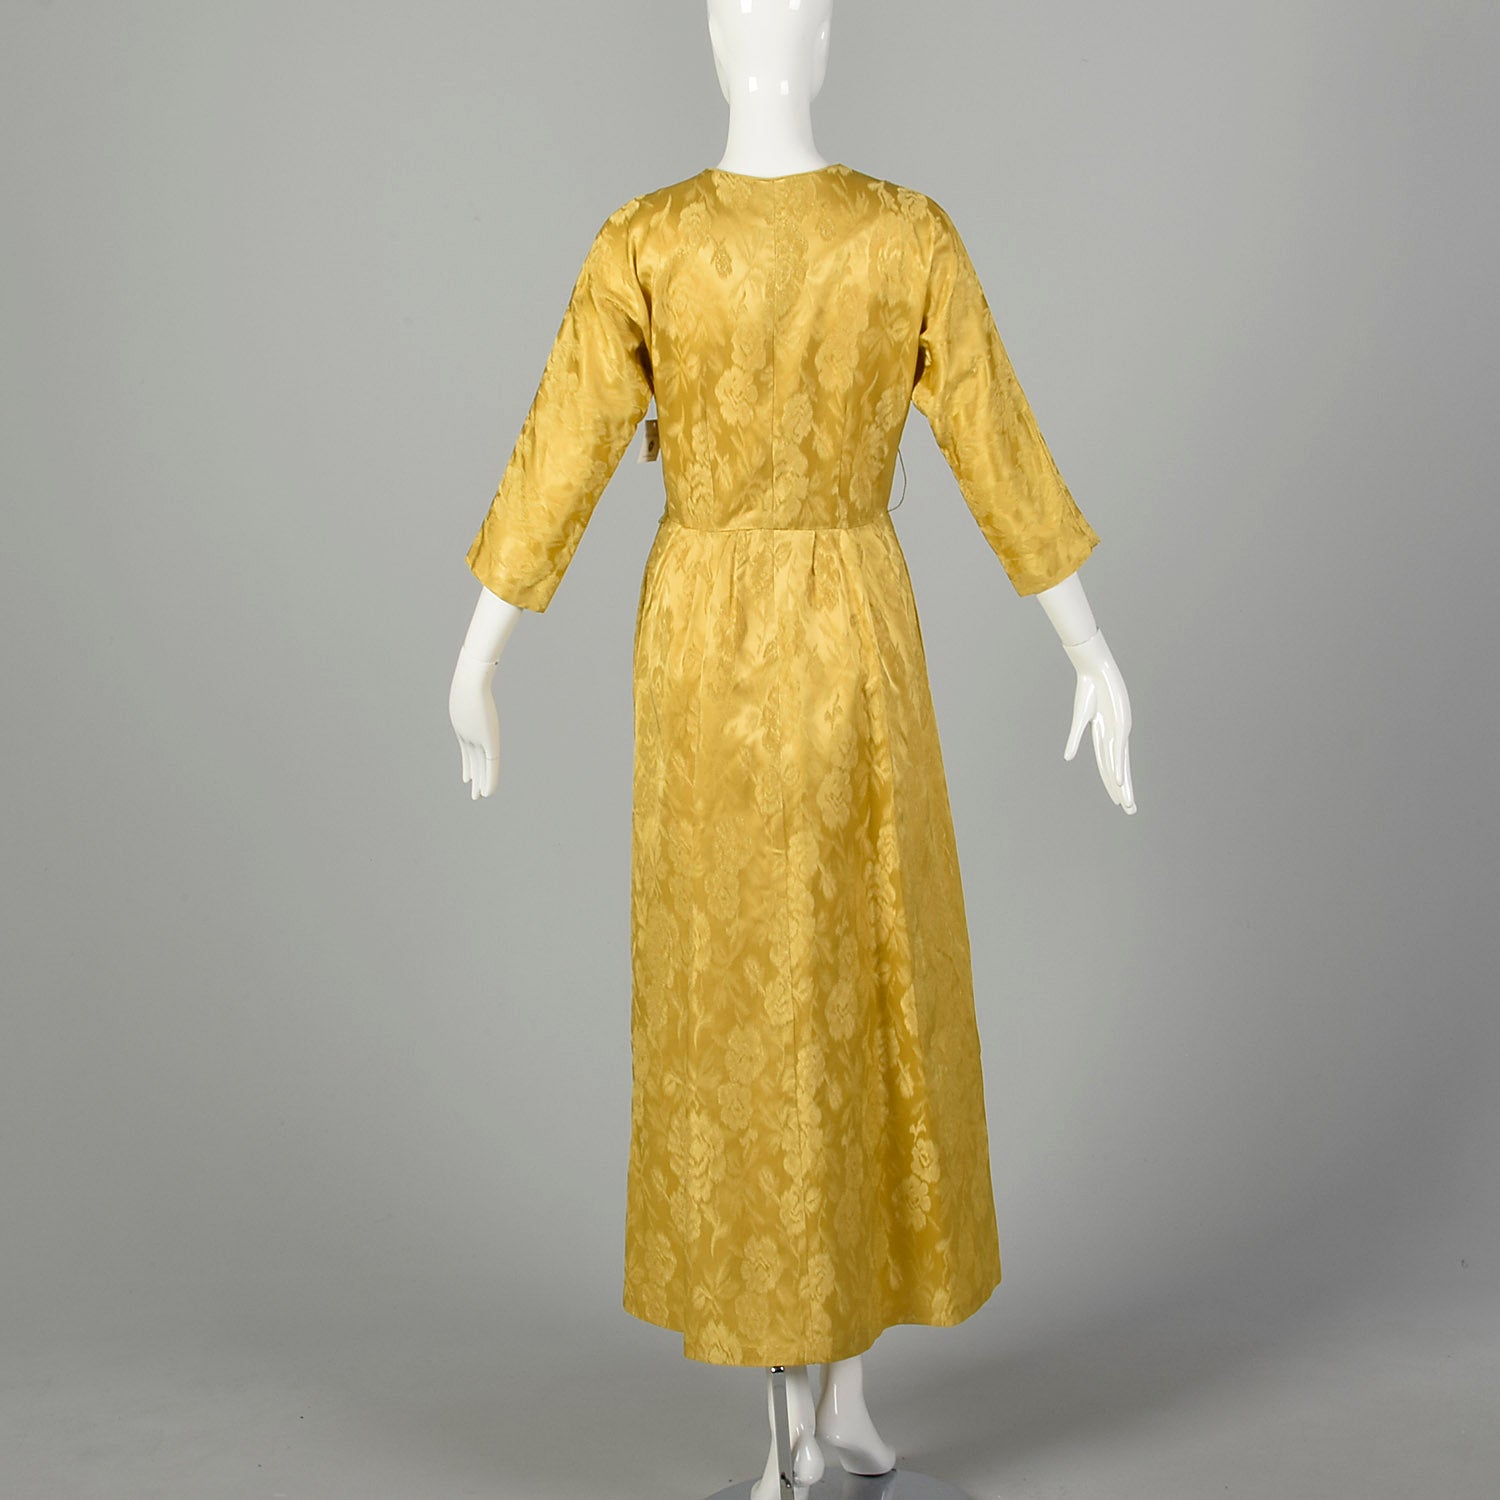 Medium 1960s Dress Gold Weave Brocade Maxi Casual Gown